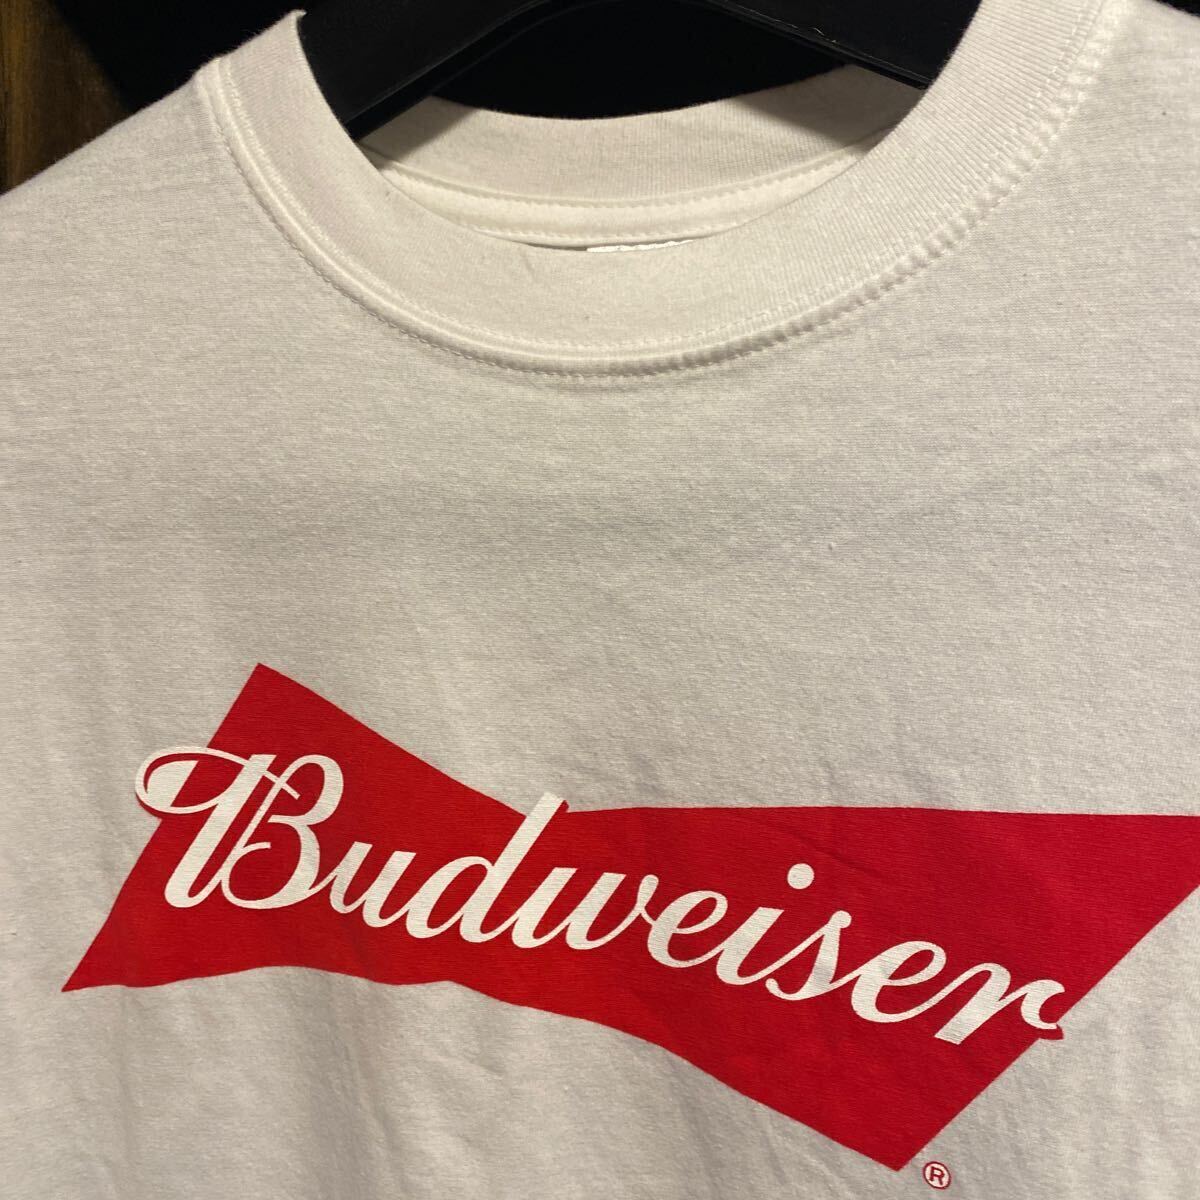 Budweiser バドワイザー 企業Tシャツ USA古着 半袖 Tシャツ ヴィンテージ ビンテージ vintage_画像2